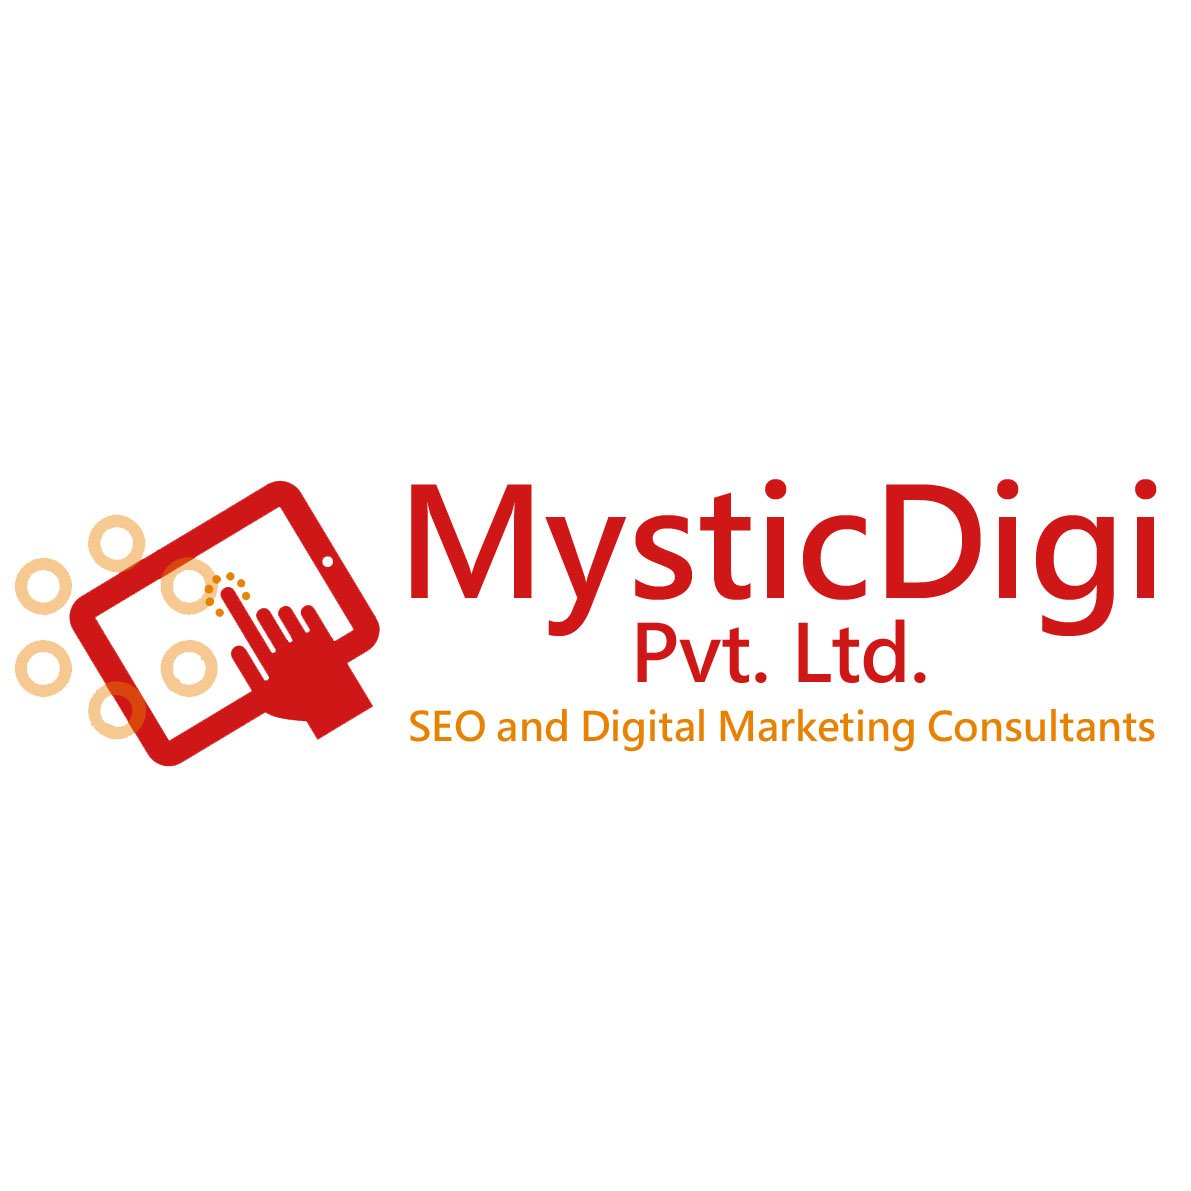 MysticDigi Pvt. Ltd is an #SEO and #DigitalMarketing consultation firm located in New Delhi, India. Follow us on Facebook: https://t.co/iuPEdzBPrL